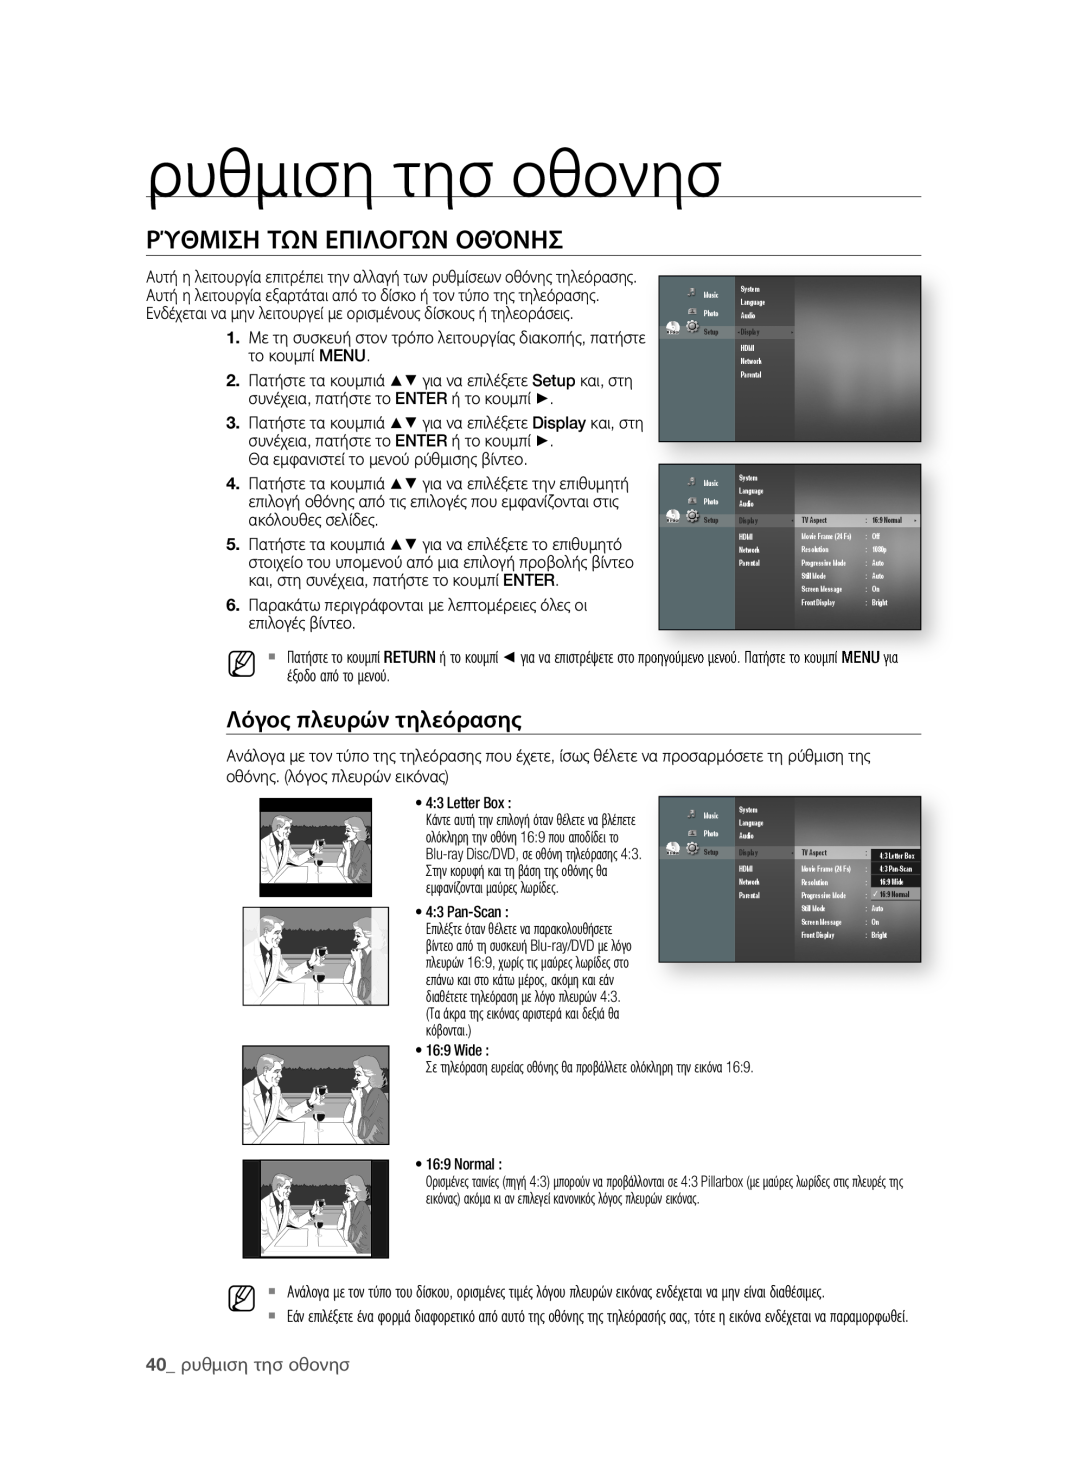 Samsung BD-P1580/EDC manual ρΎθΜιση ΤΩΝ εΠιΛοΓώΝ οθόΝησ, Λόγος πλευρών τηλεόρασης, 0 ρυθμιση τησ οθονησ 